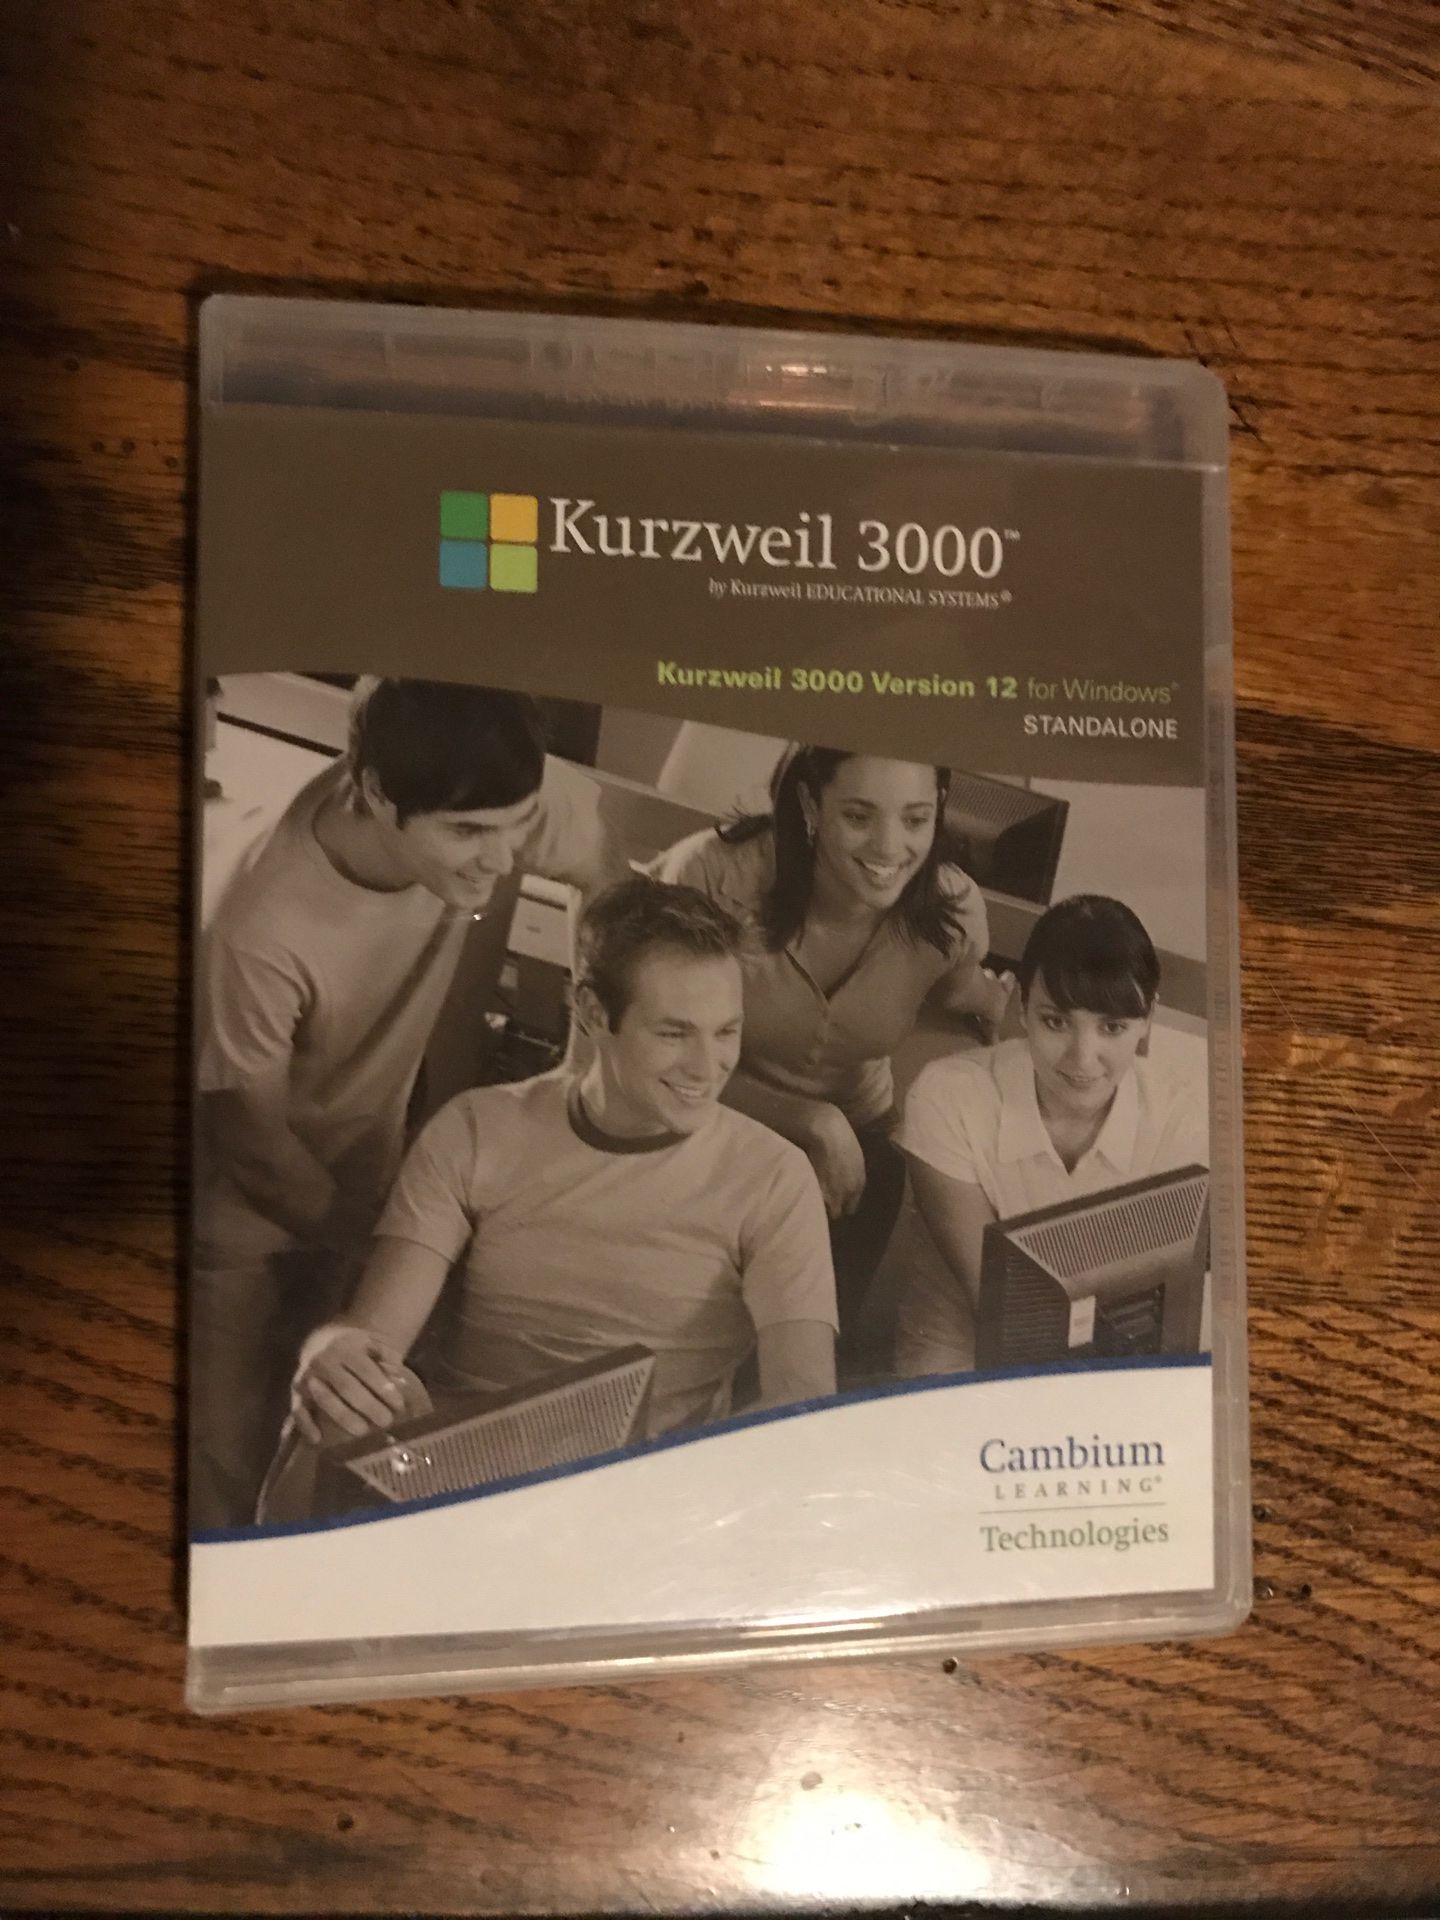 Kurtzweil computer program